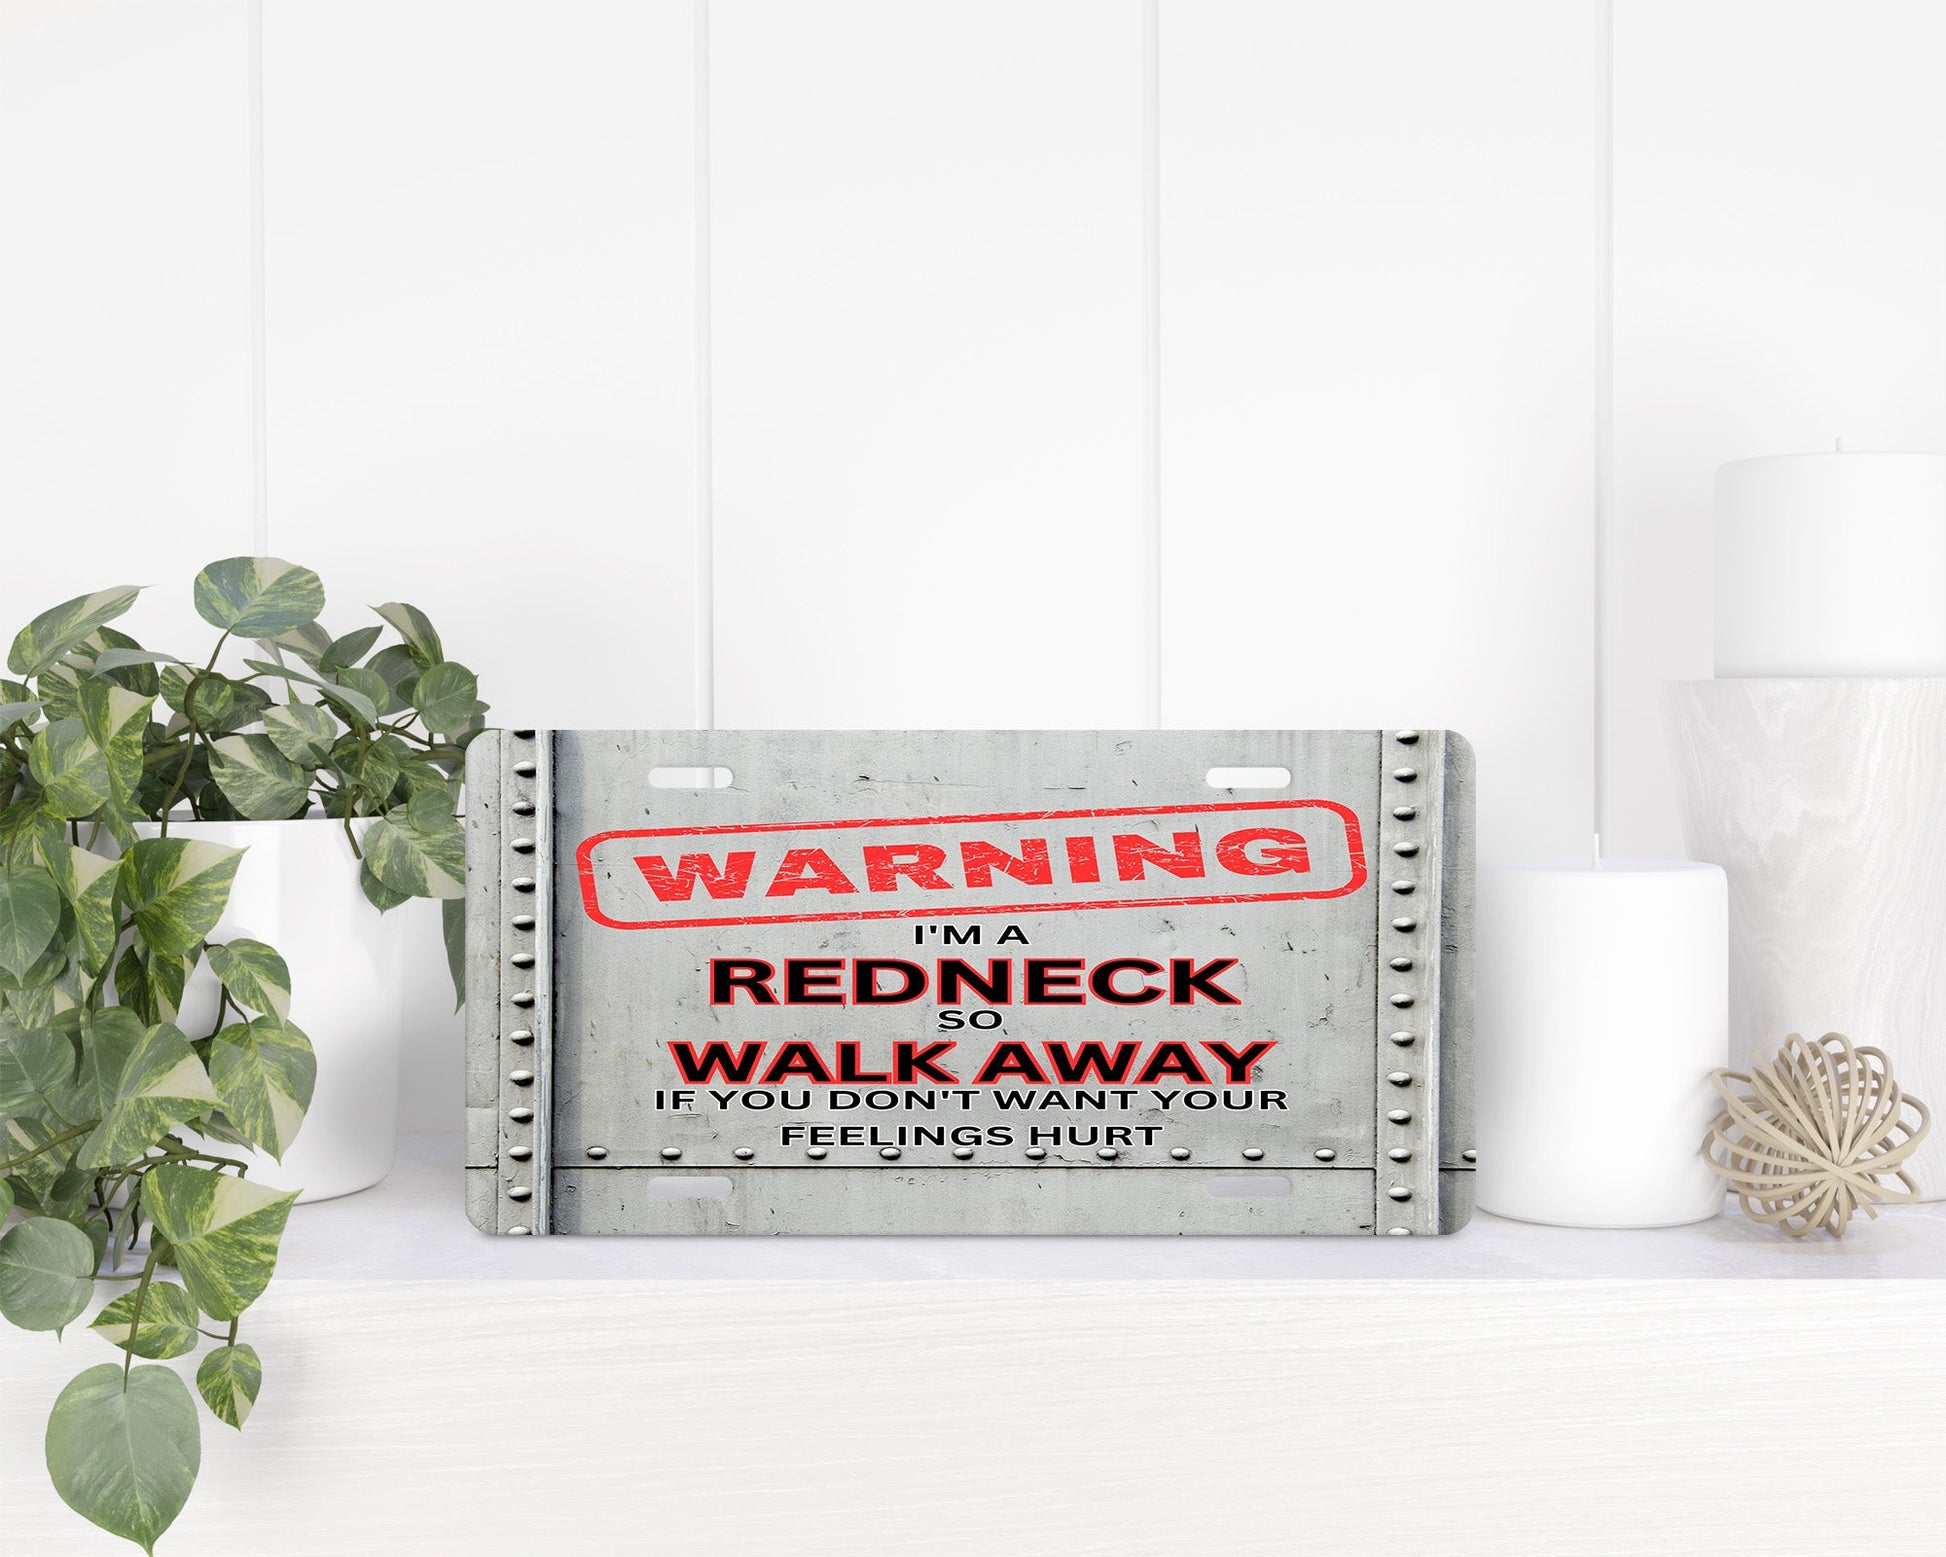 Redneck|License Plate - Vehicle License Plates